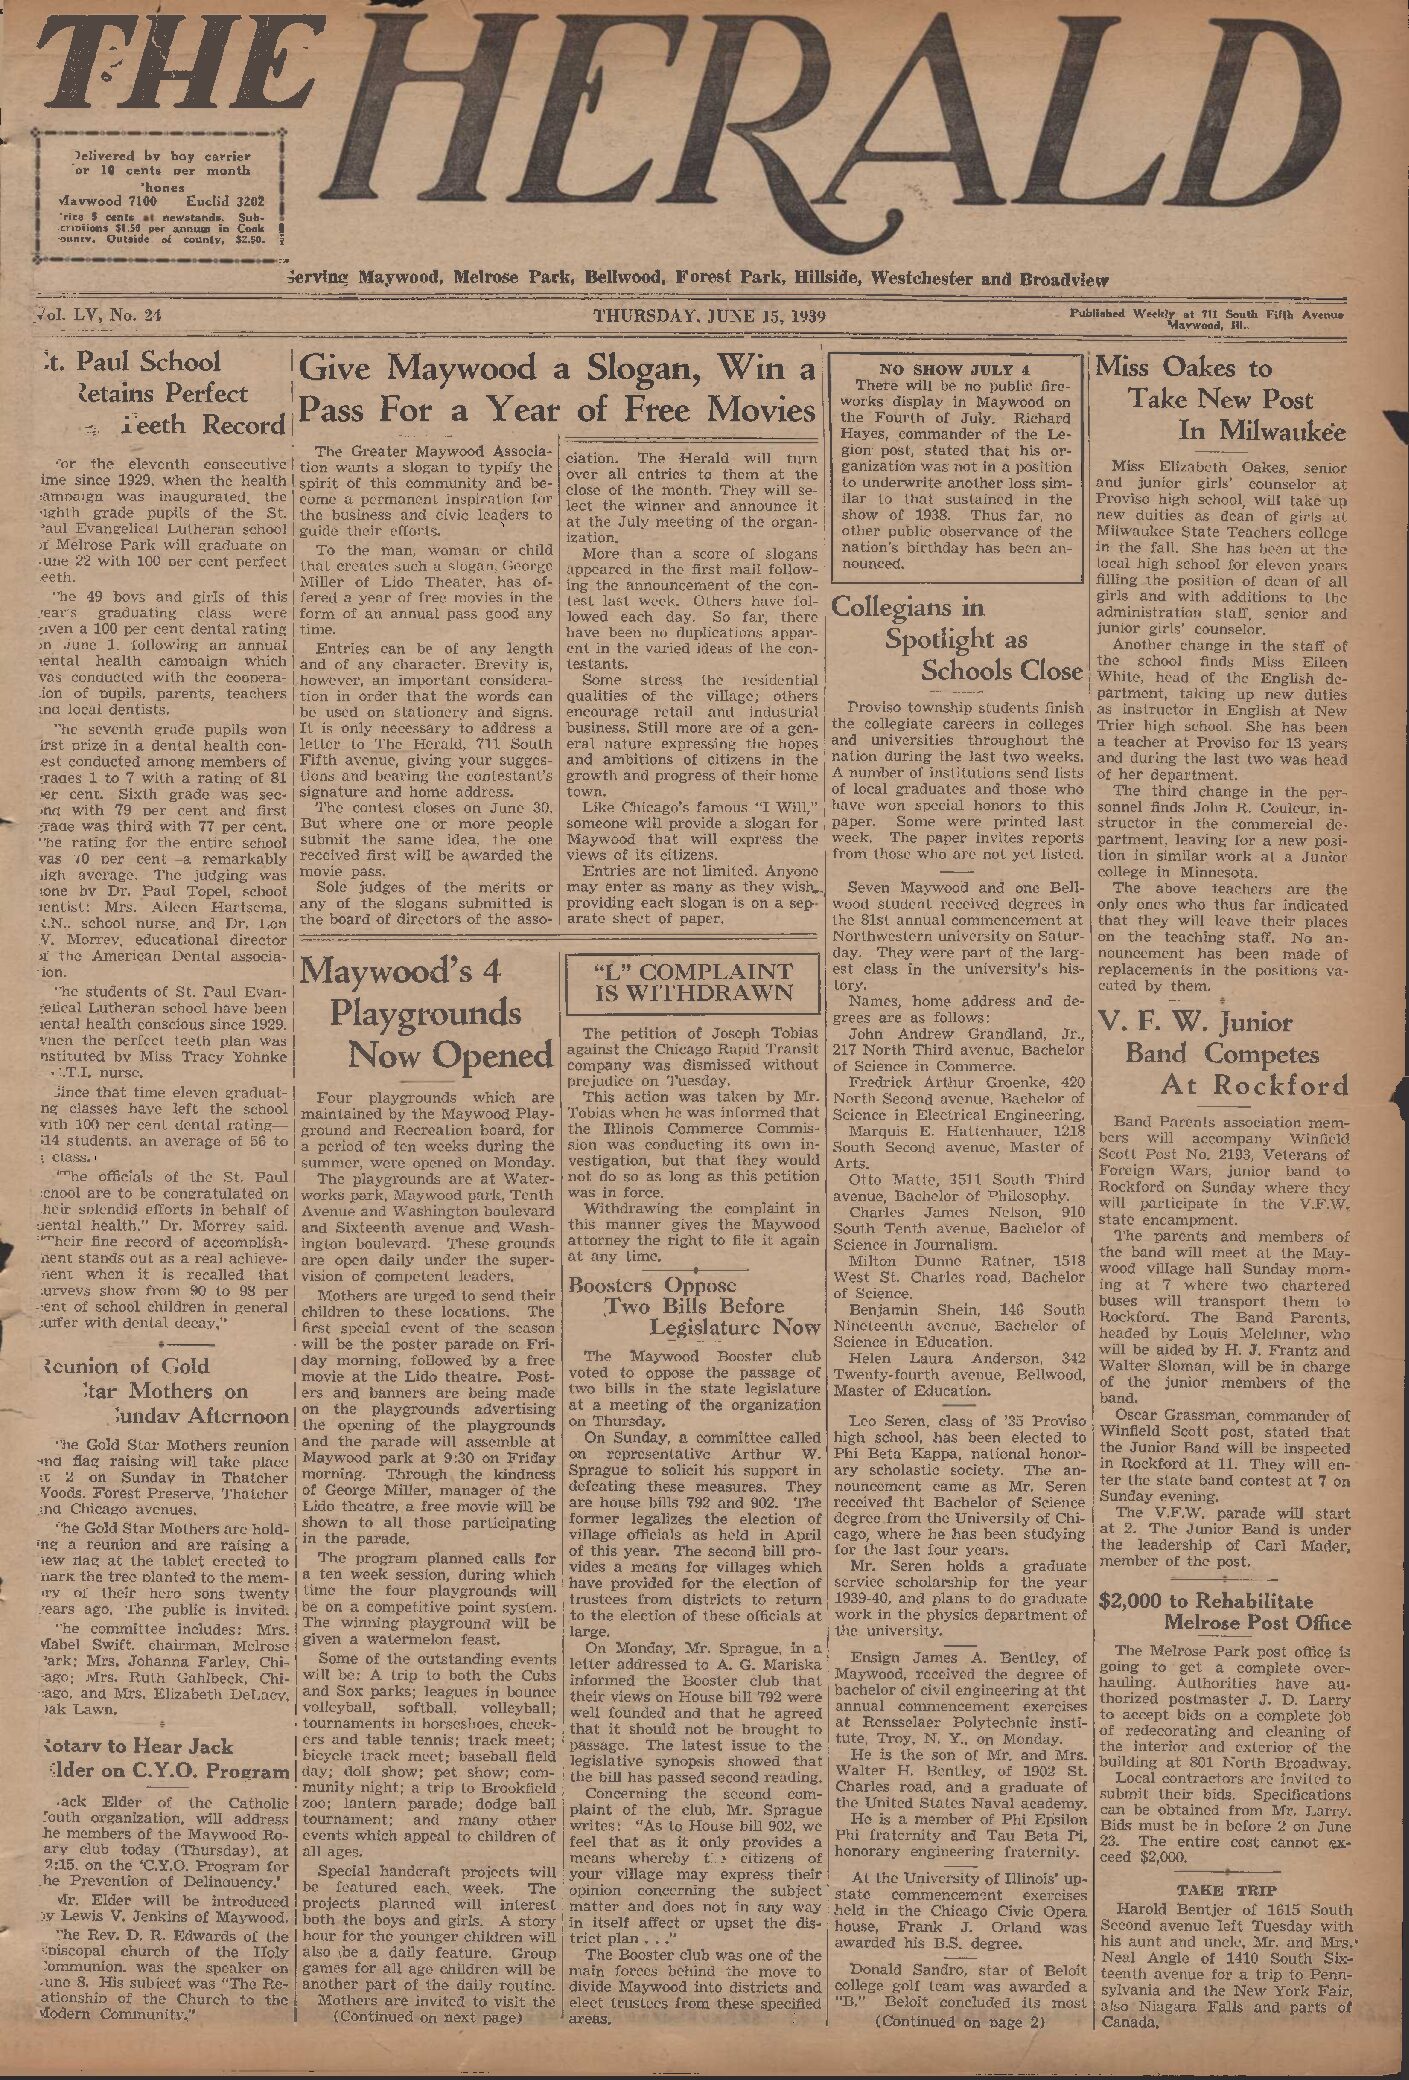 The Herald – 19390615